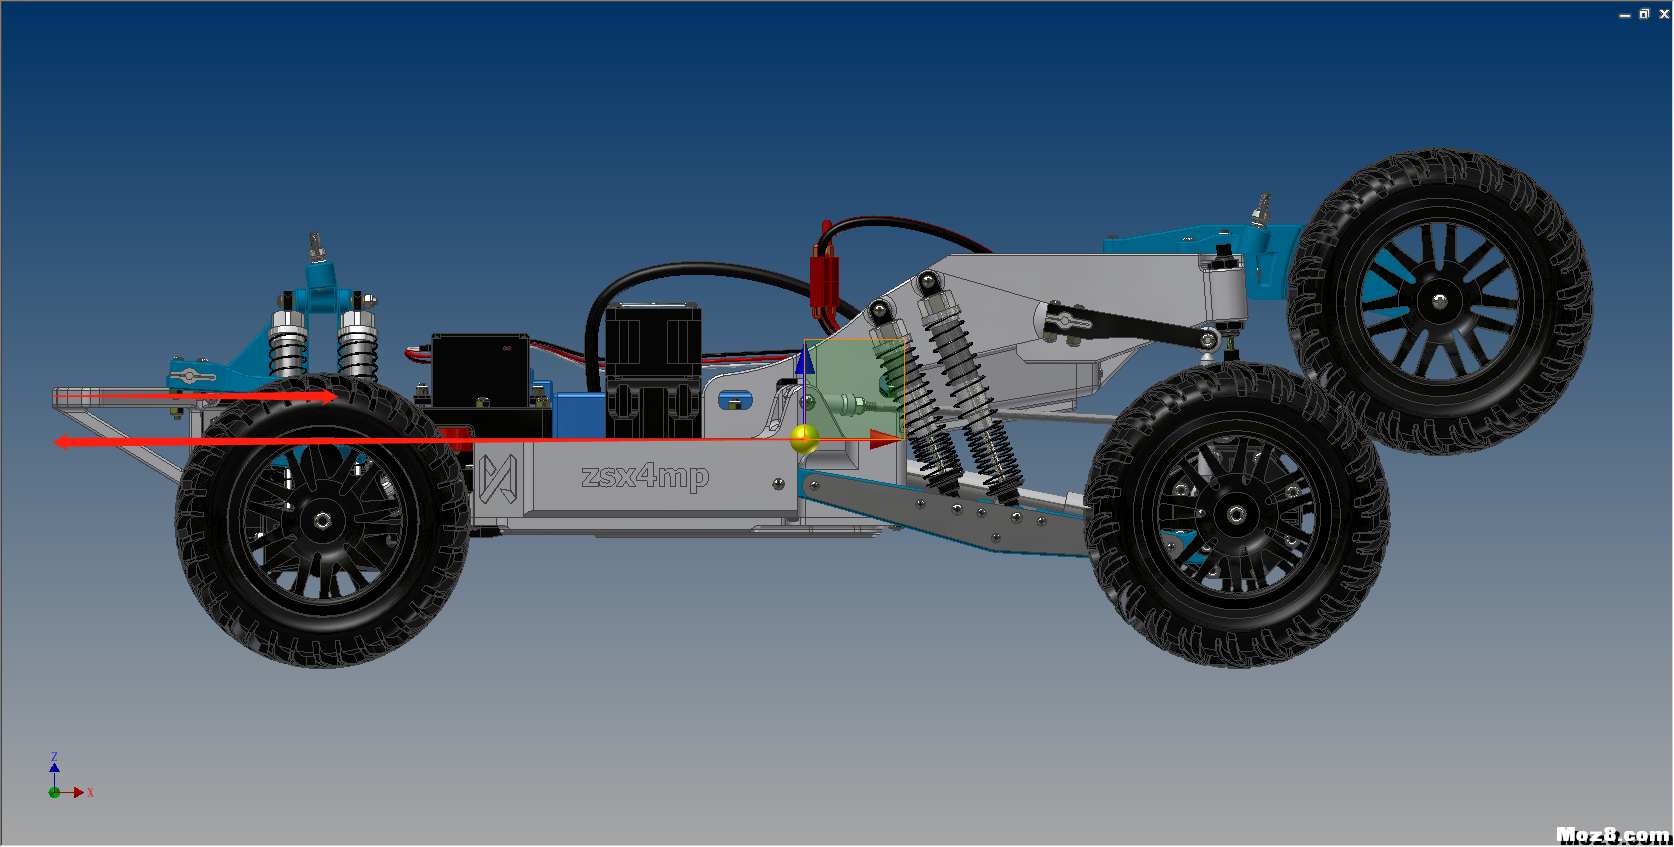 【zsx4mp】3D打印版Trophy Truck模型  作者:zsx4mp 2778 